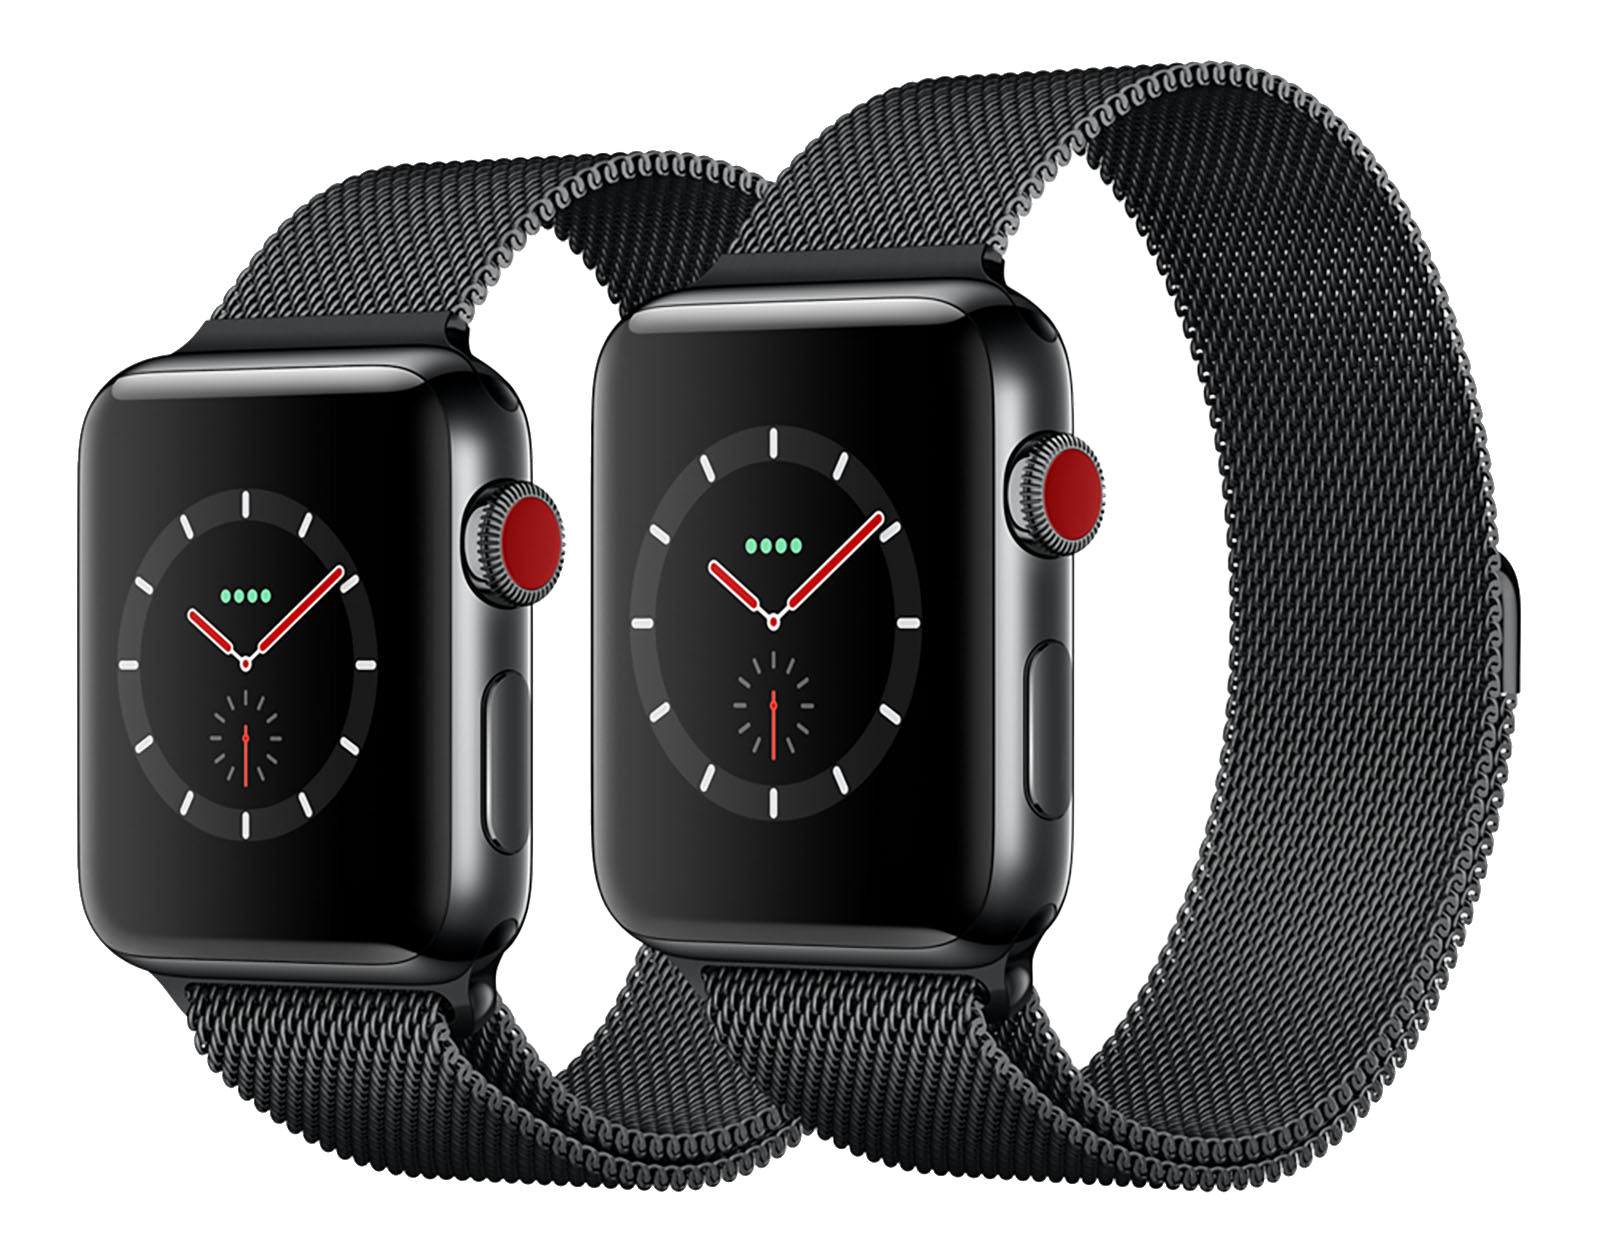 Best Apple Watch Series 3 MR2X2LL/A deals on GPS plus cellular models